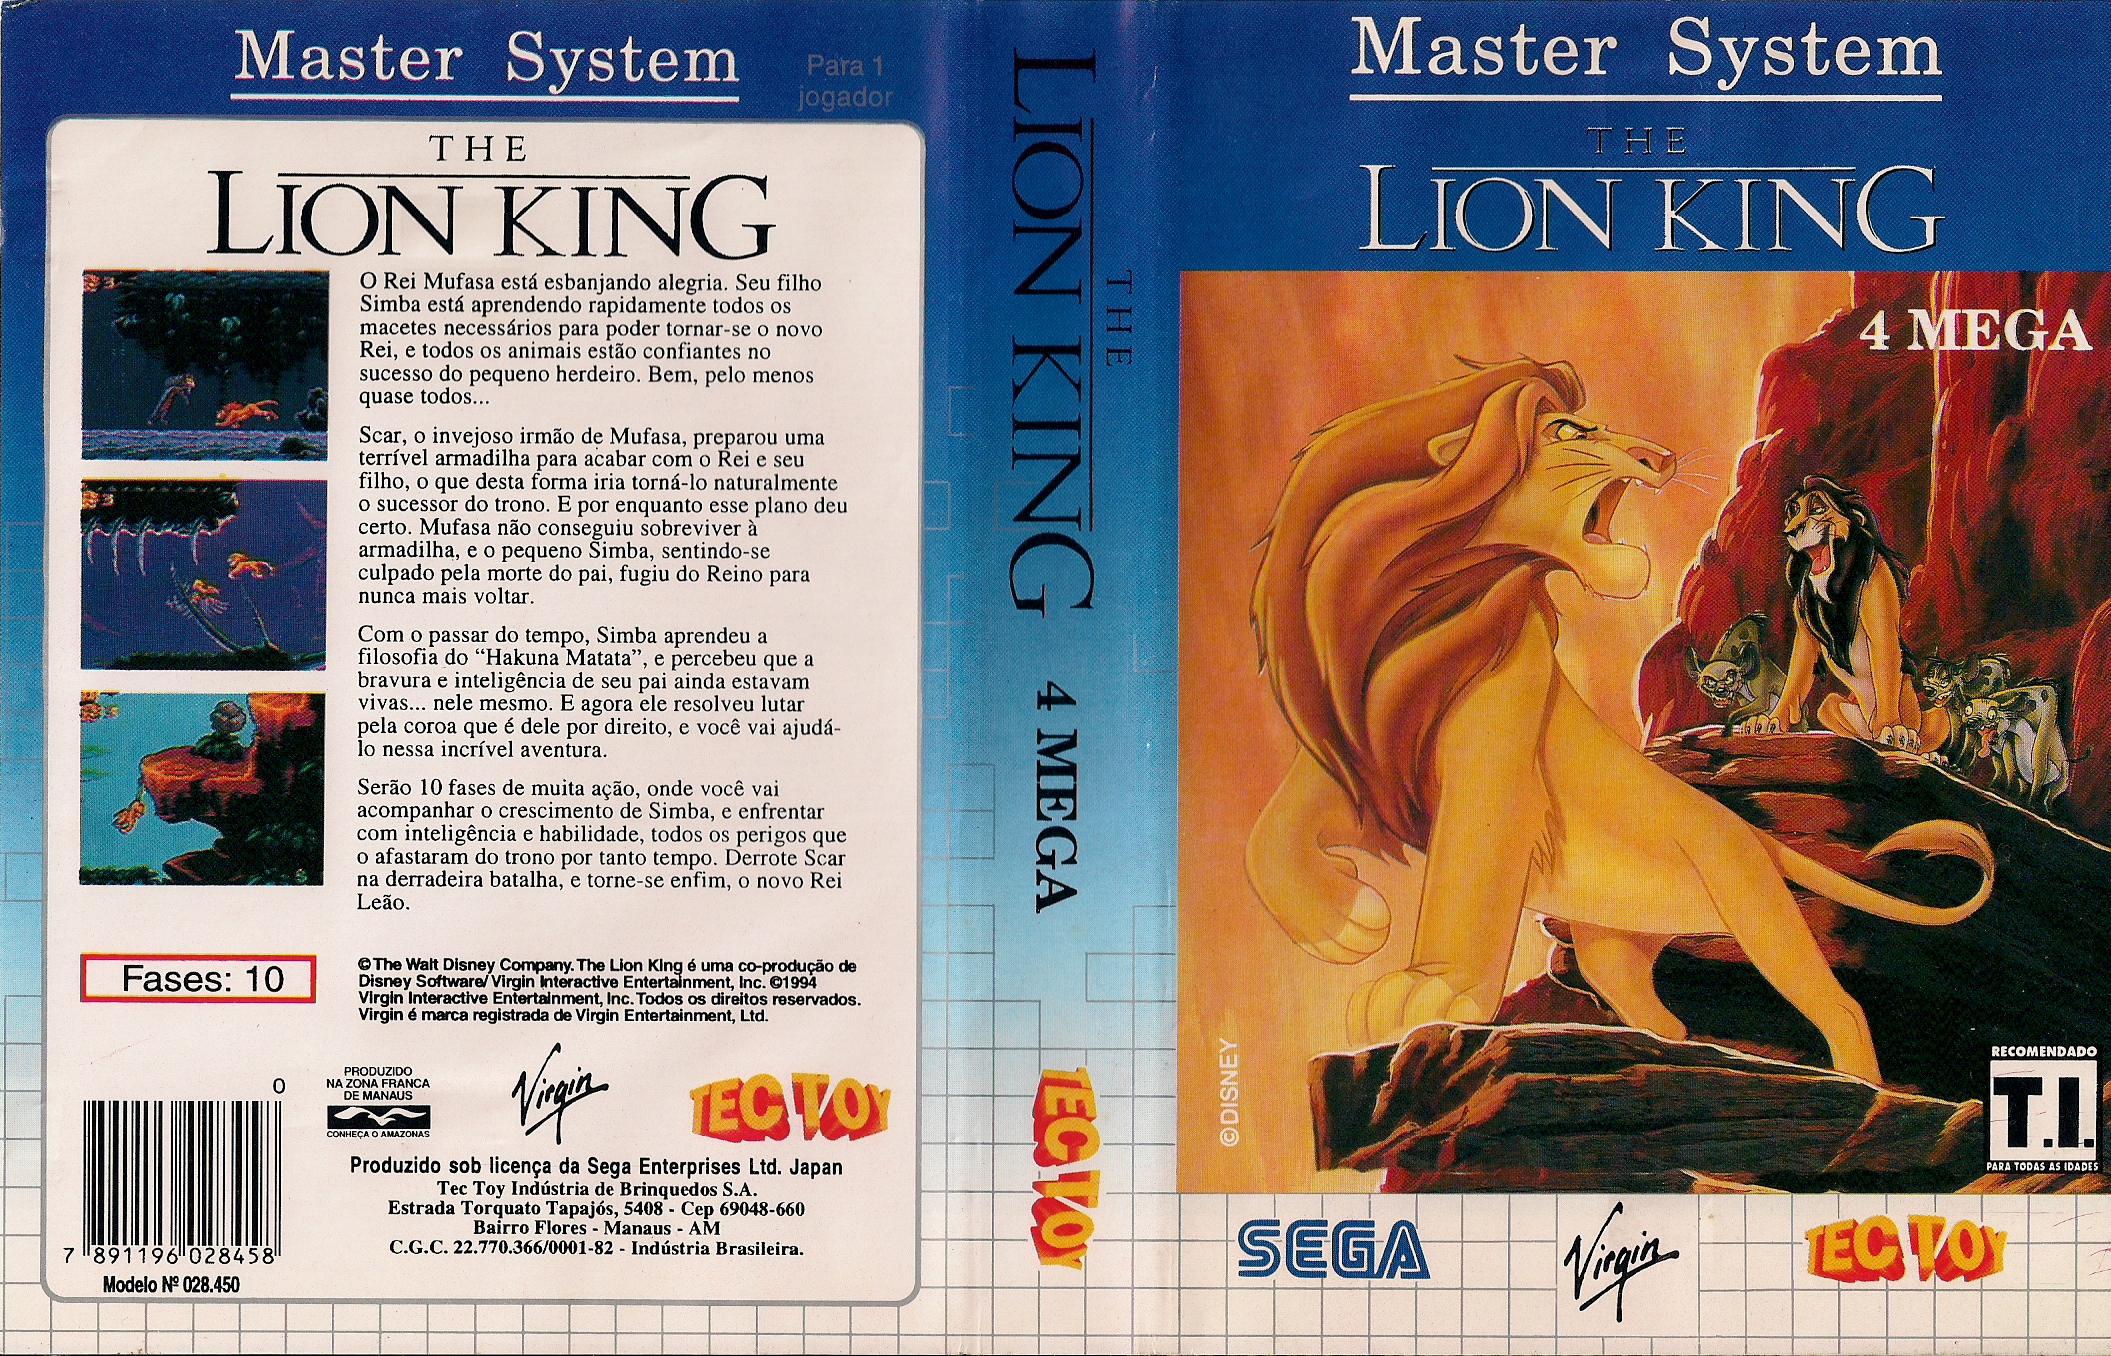 Король лев на сеге. Lion King Sega обложка. Sega Mega Drive Lion King. Lion King 3 Sega обложки. Lion King (Rus) Sega обложка.